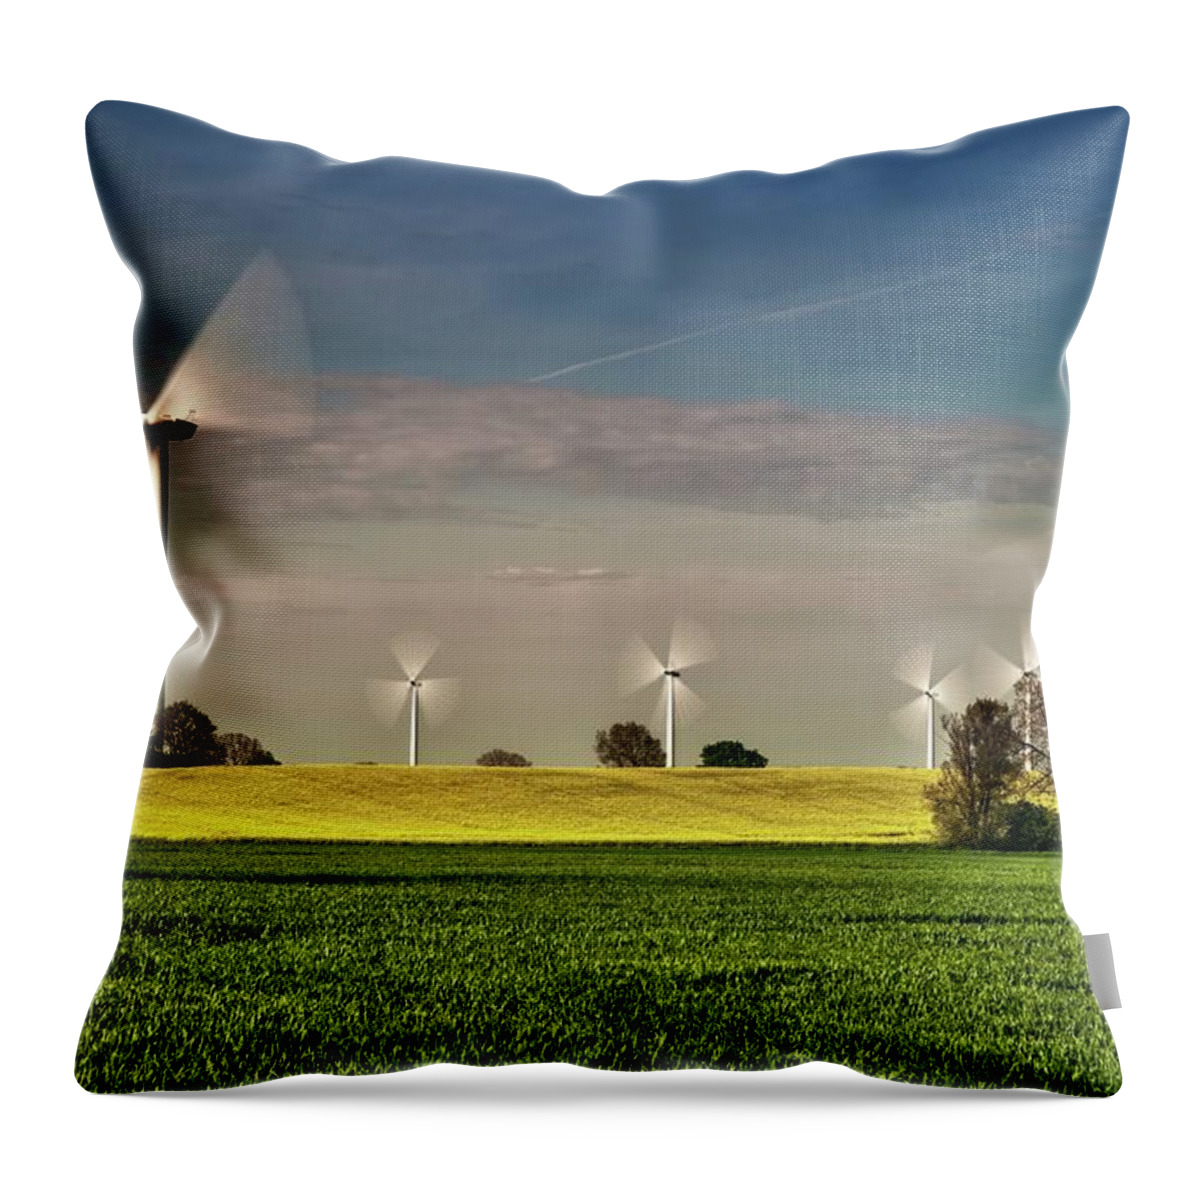 Environmental Conservation Throw Pillow featuring the photograph Wind Park by Siegfried Haasch